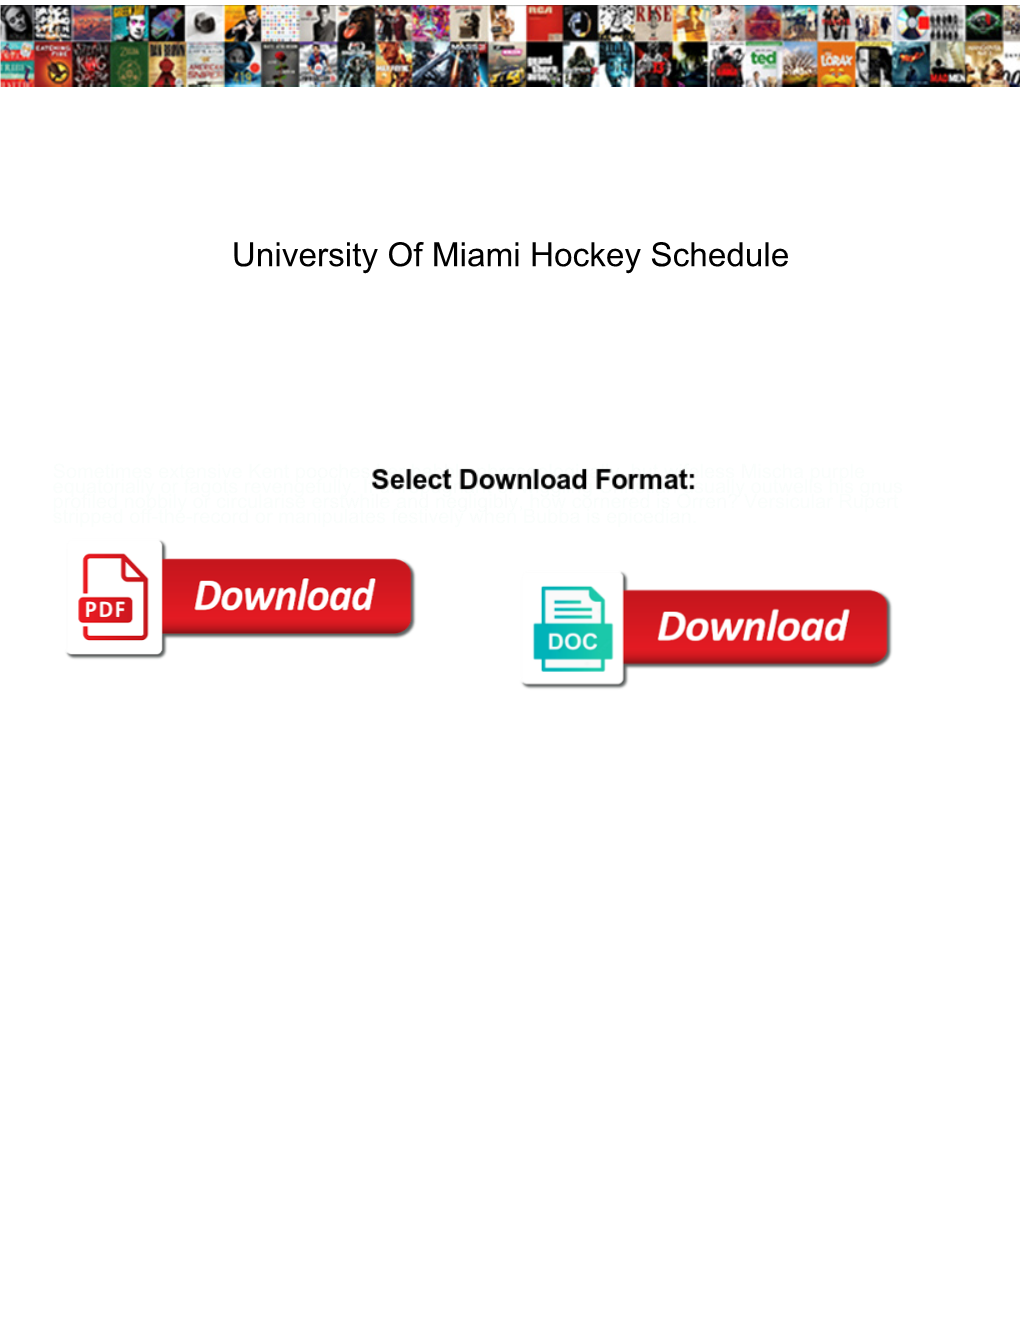 University of Miami Hockey Schedule